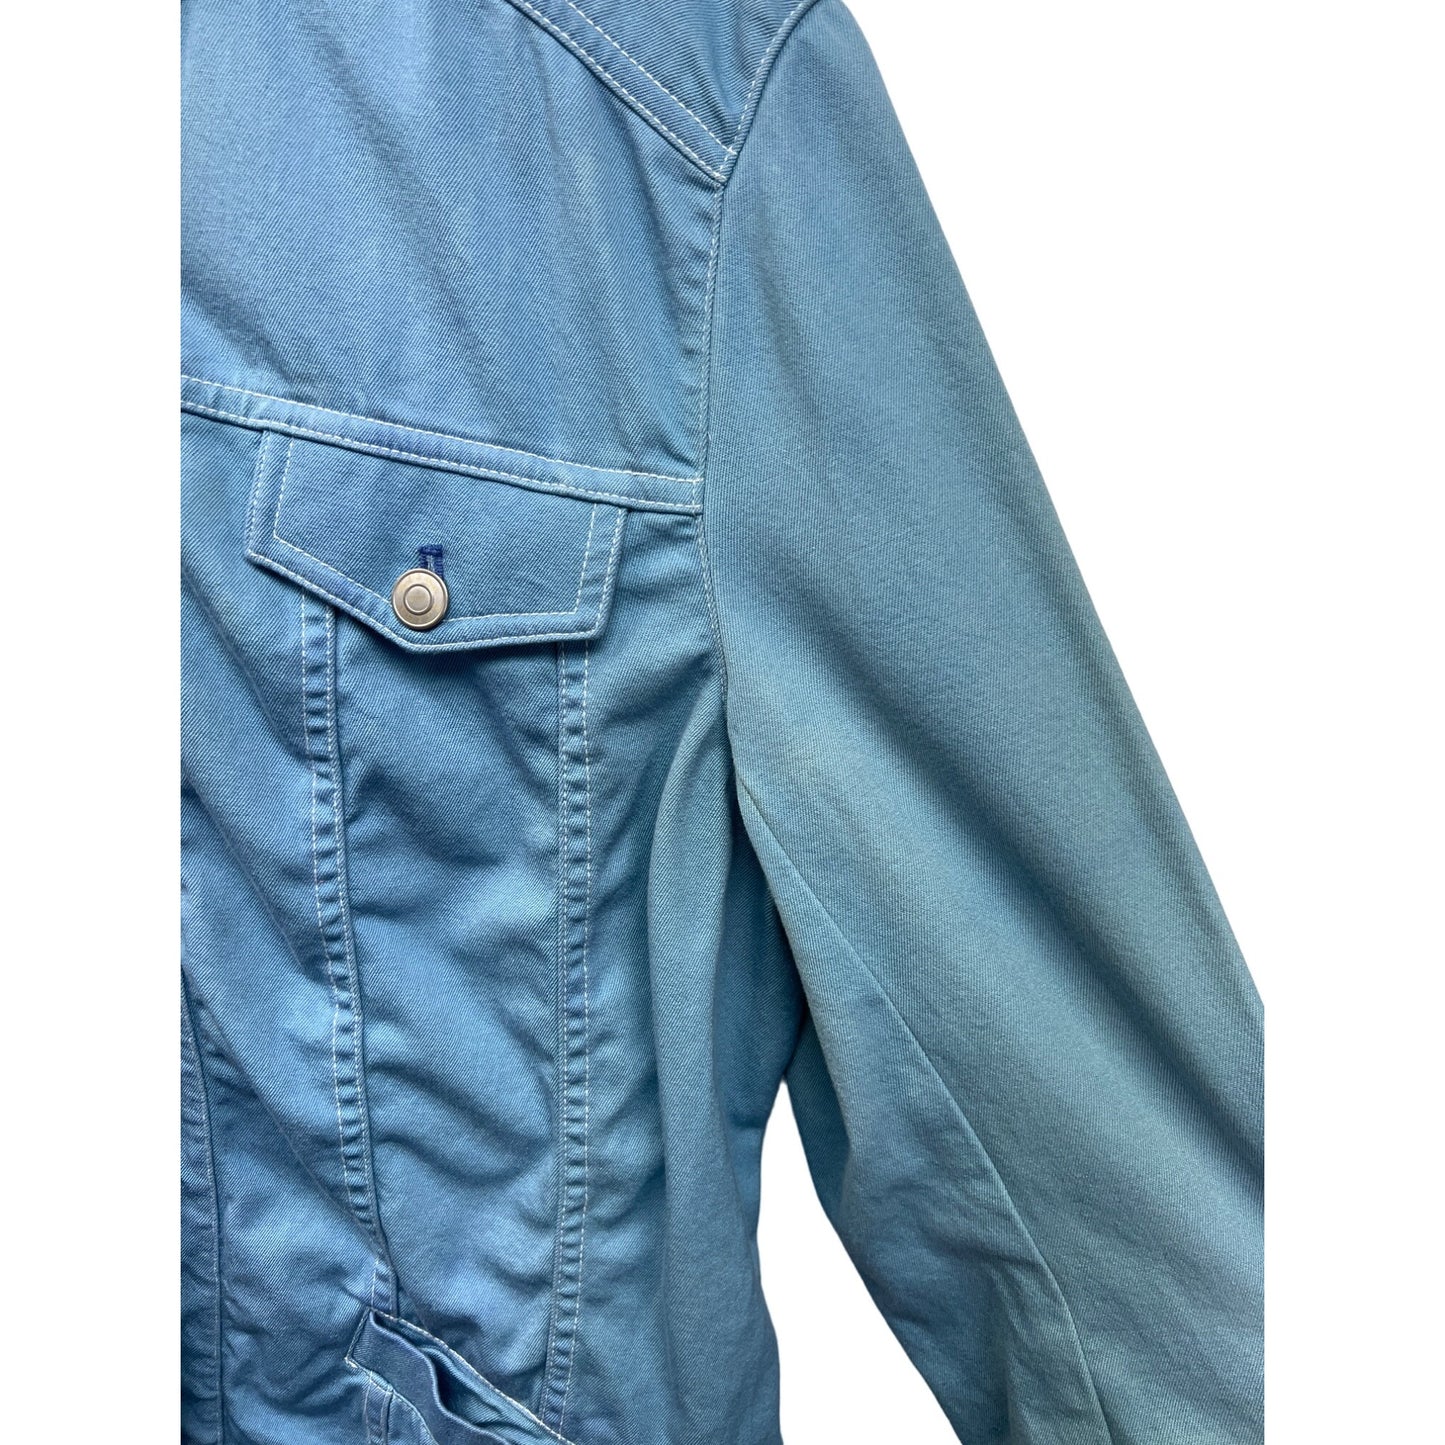 Peck & Peck Weekend Blue Trucker Style Jacket with Ruffle Trim